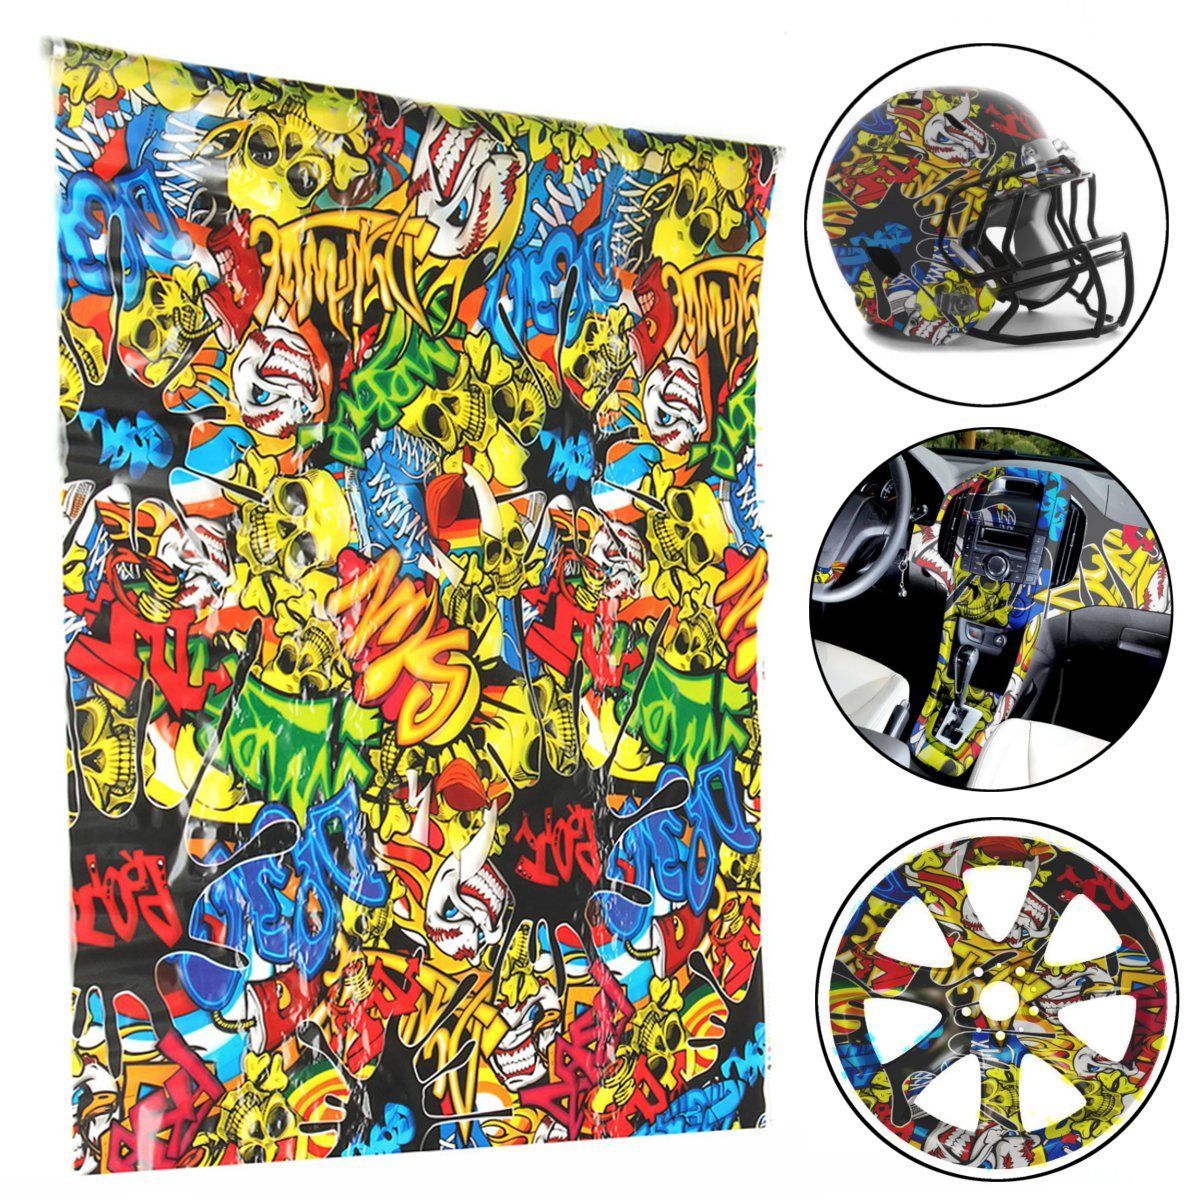 Colorful-Skulls-PVA-Hydrographic-Water-Transfer-Printing-Hydro-Helmet-Film-Decorations-1530426